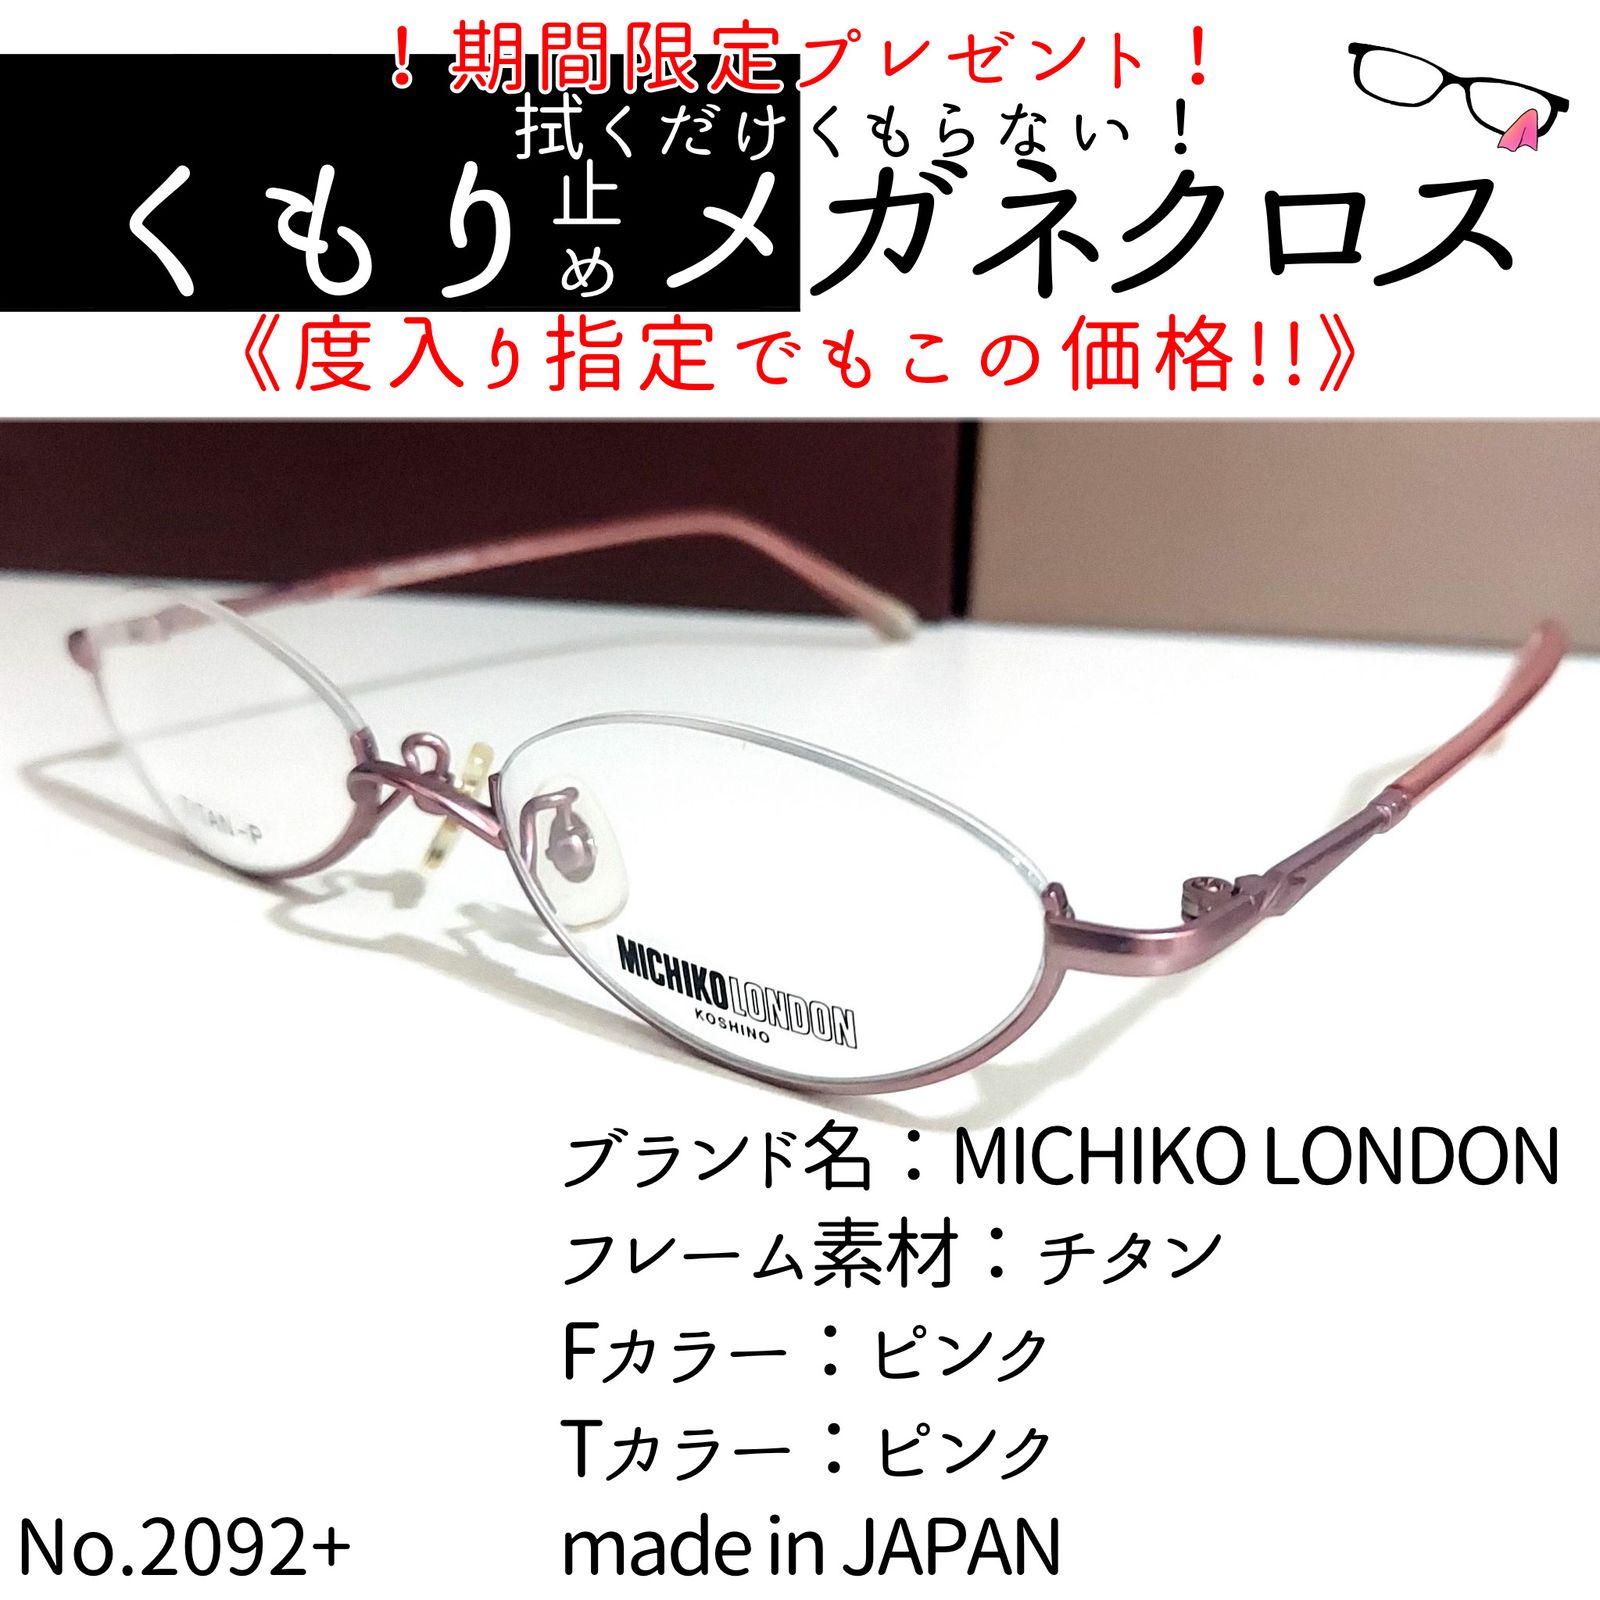 No.2092+メガネ MICHIKO LONDON【度数入り込み価格】 - スッキリ生活